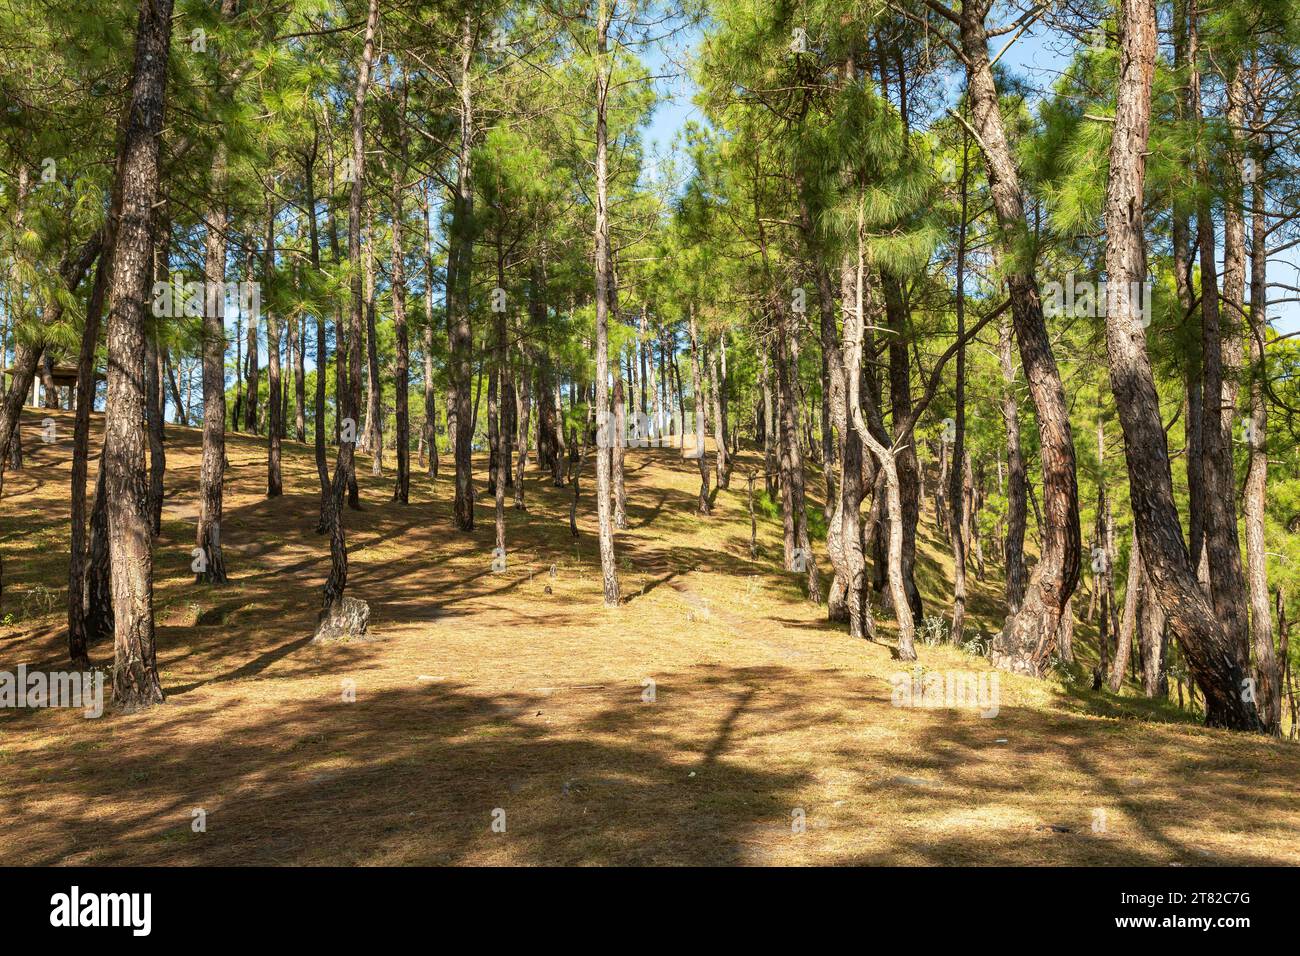 Deodars cedar trees in Dandeshwar, Jageshwar Road, Almora, Uttarakhand, India Stock Photo